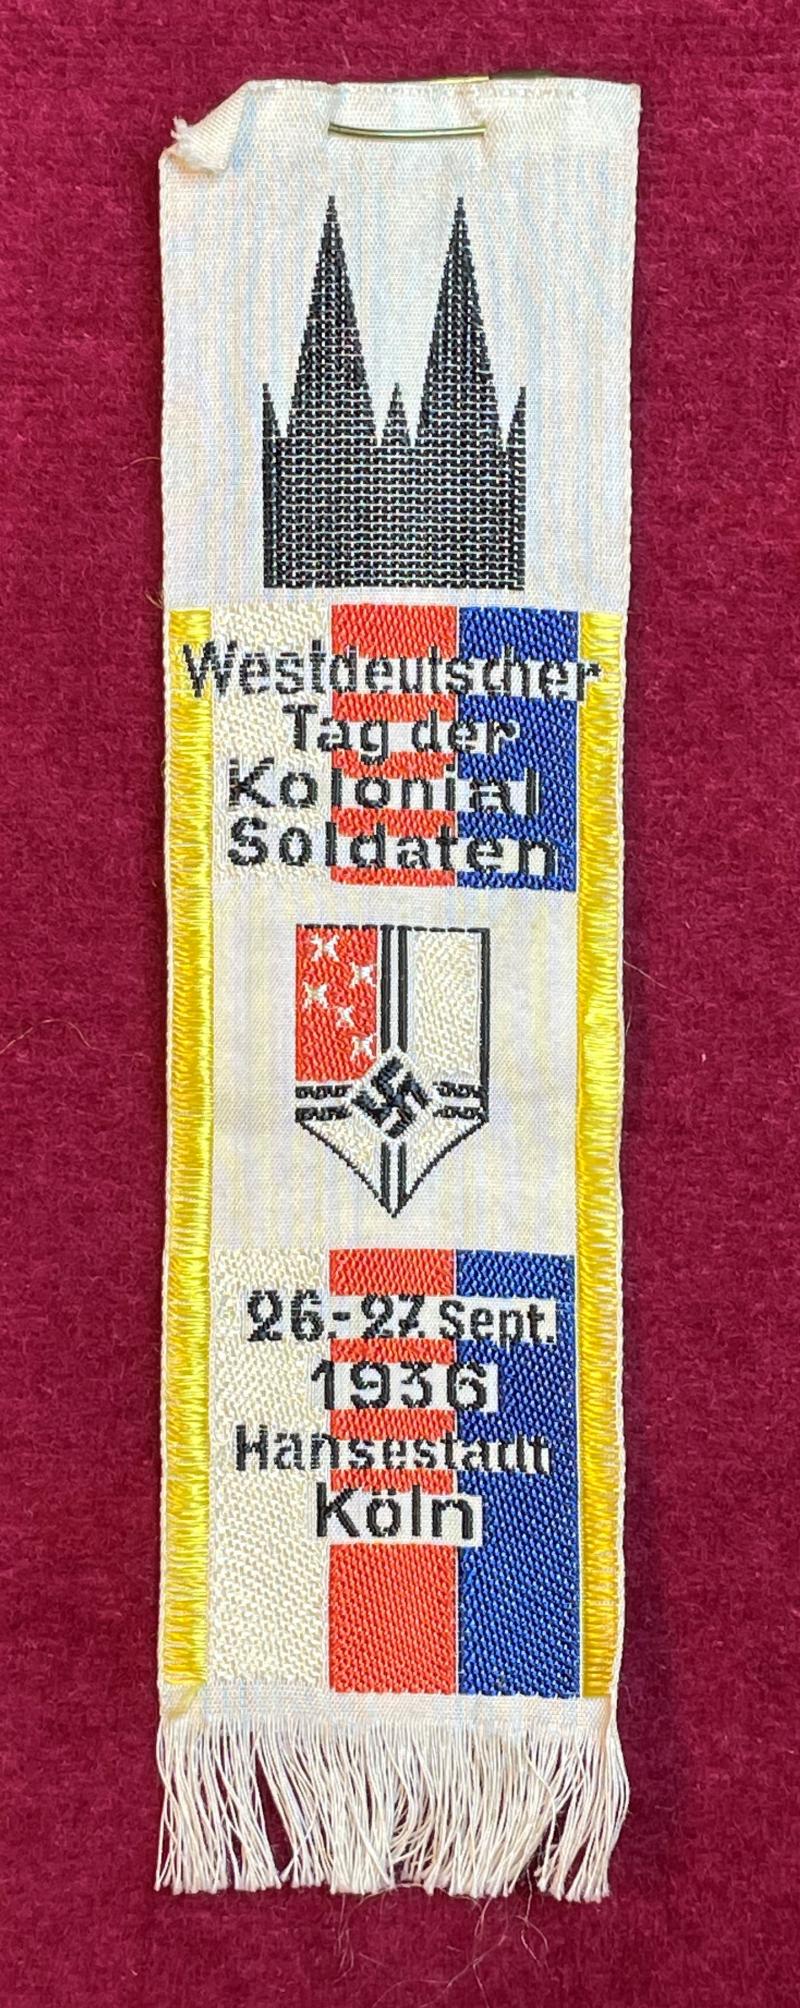 3rd Reich Tag der Kolonial Soldaten 1936 (RKB)